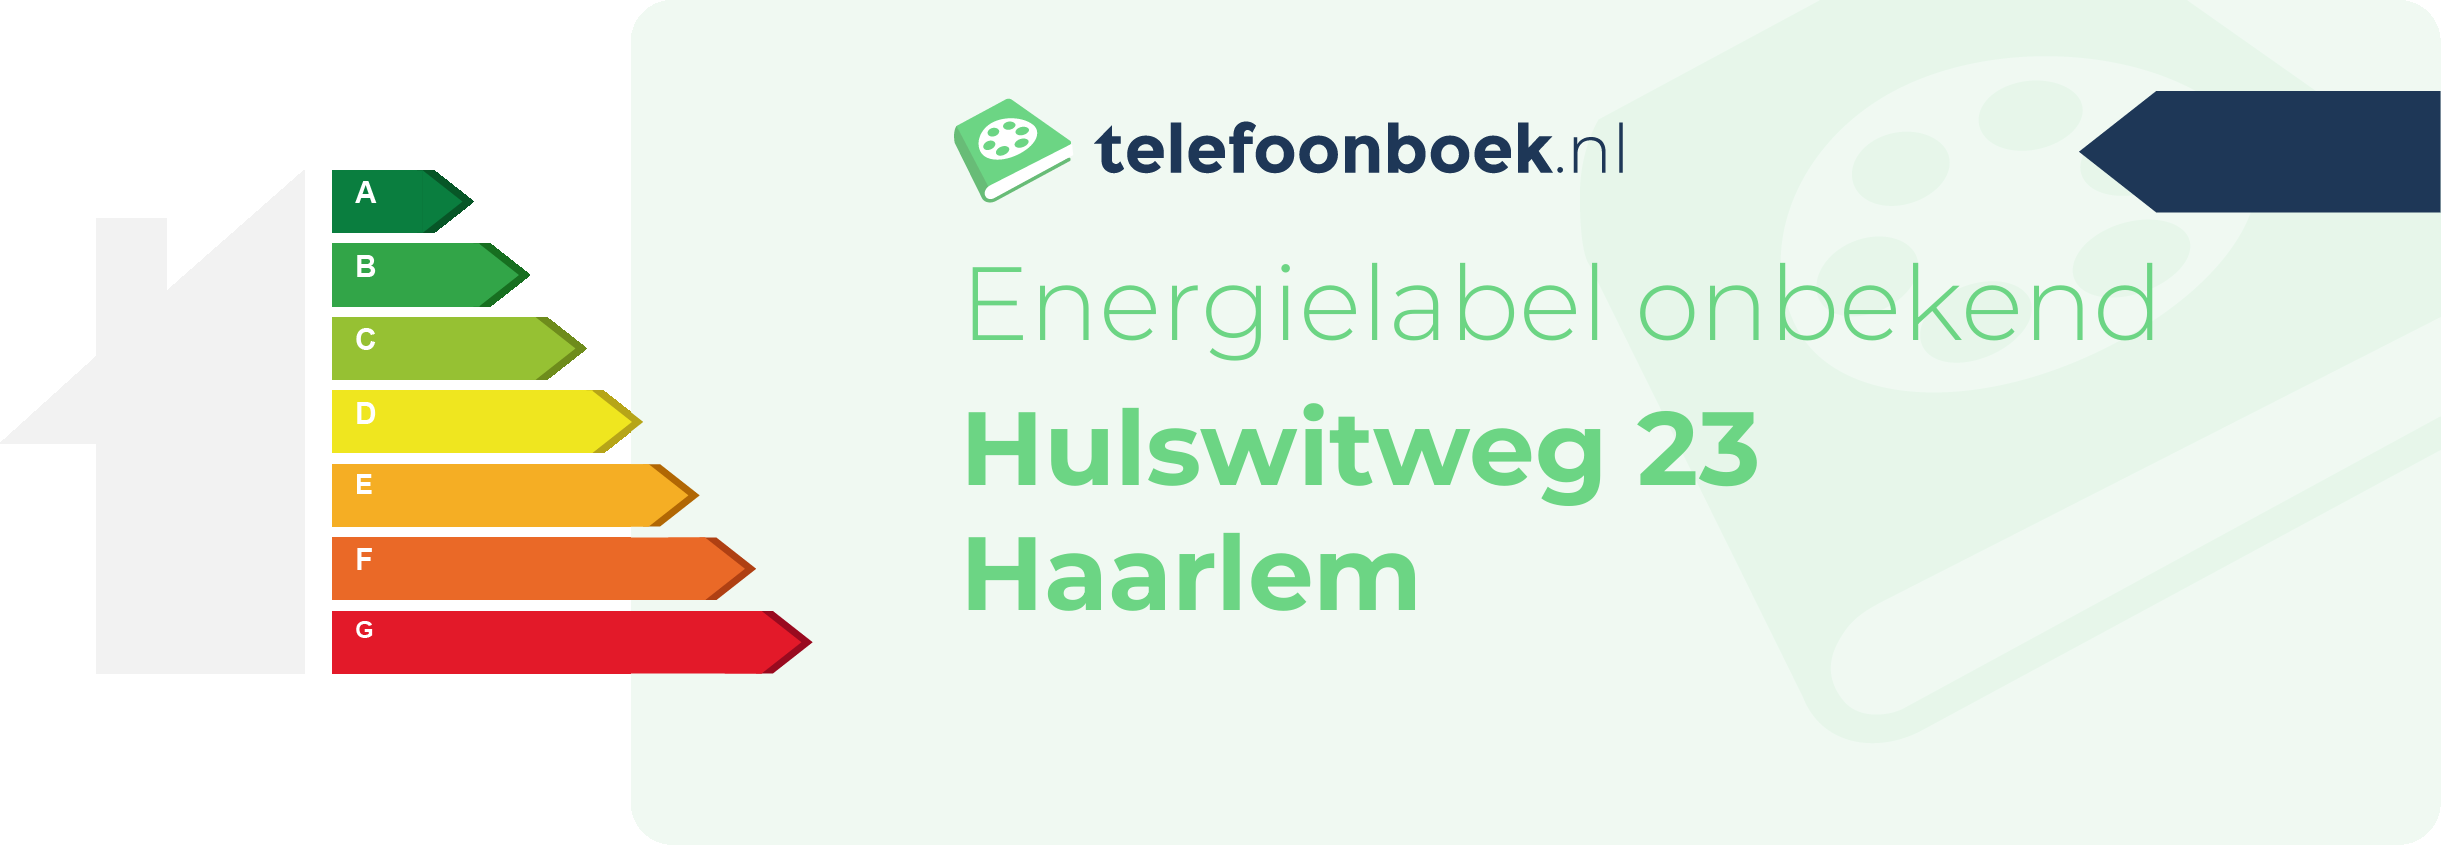 Energielabel Hulswitweg 23 Haarlem